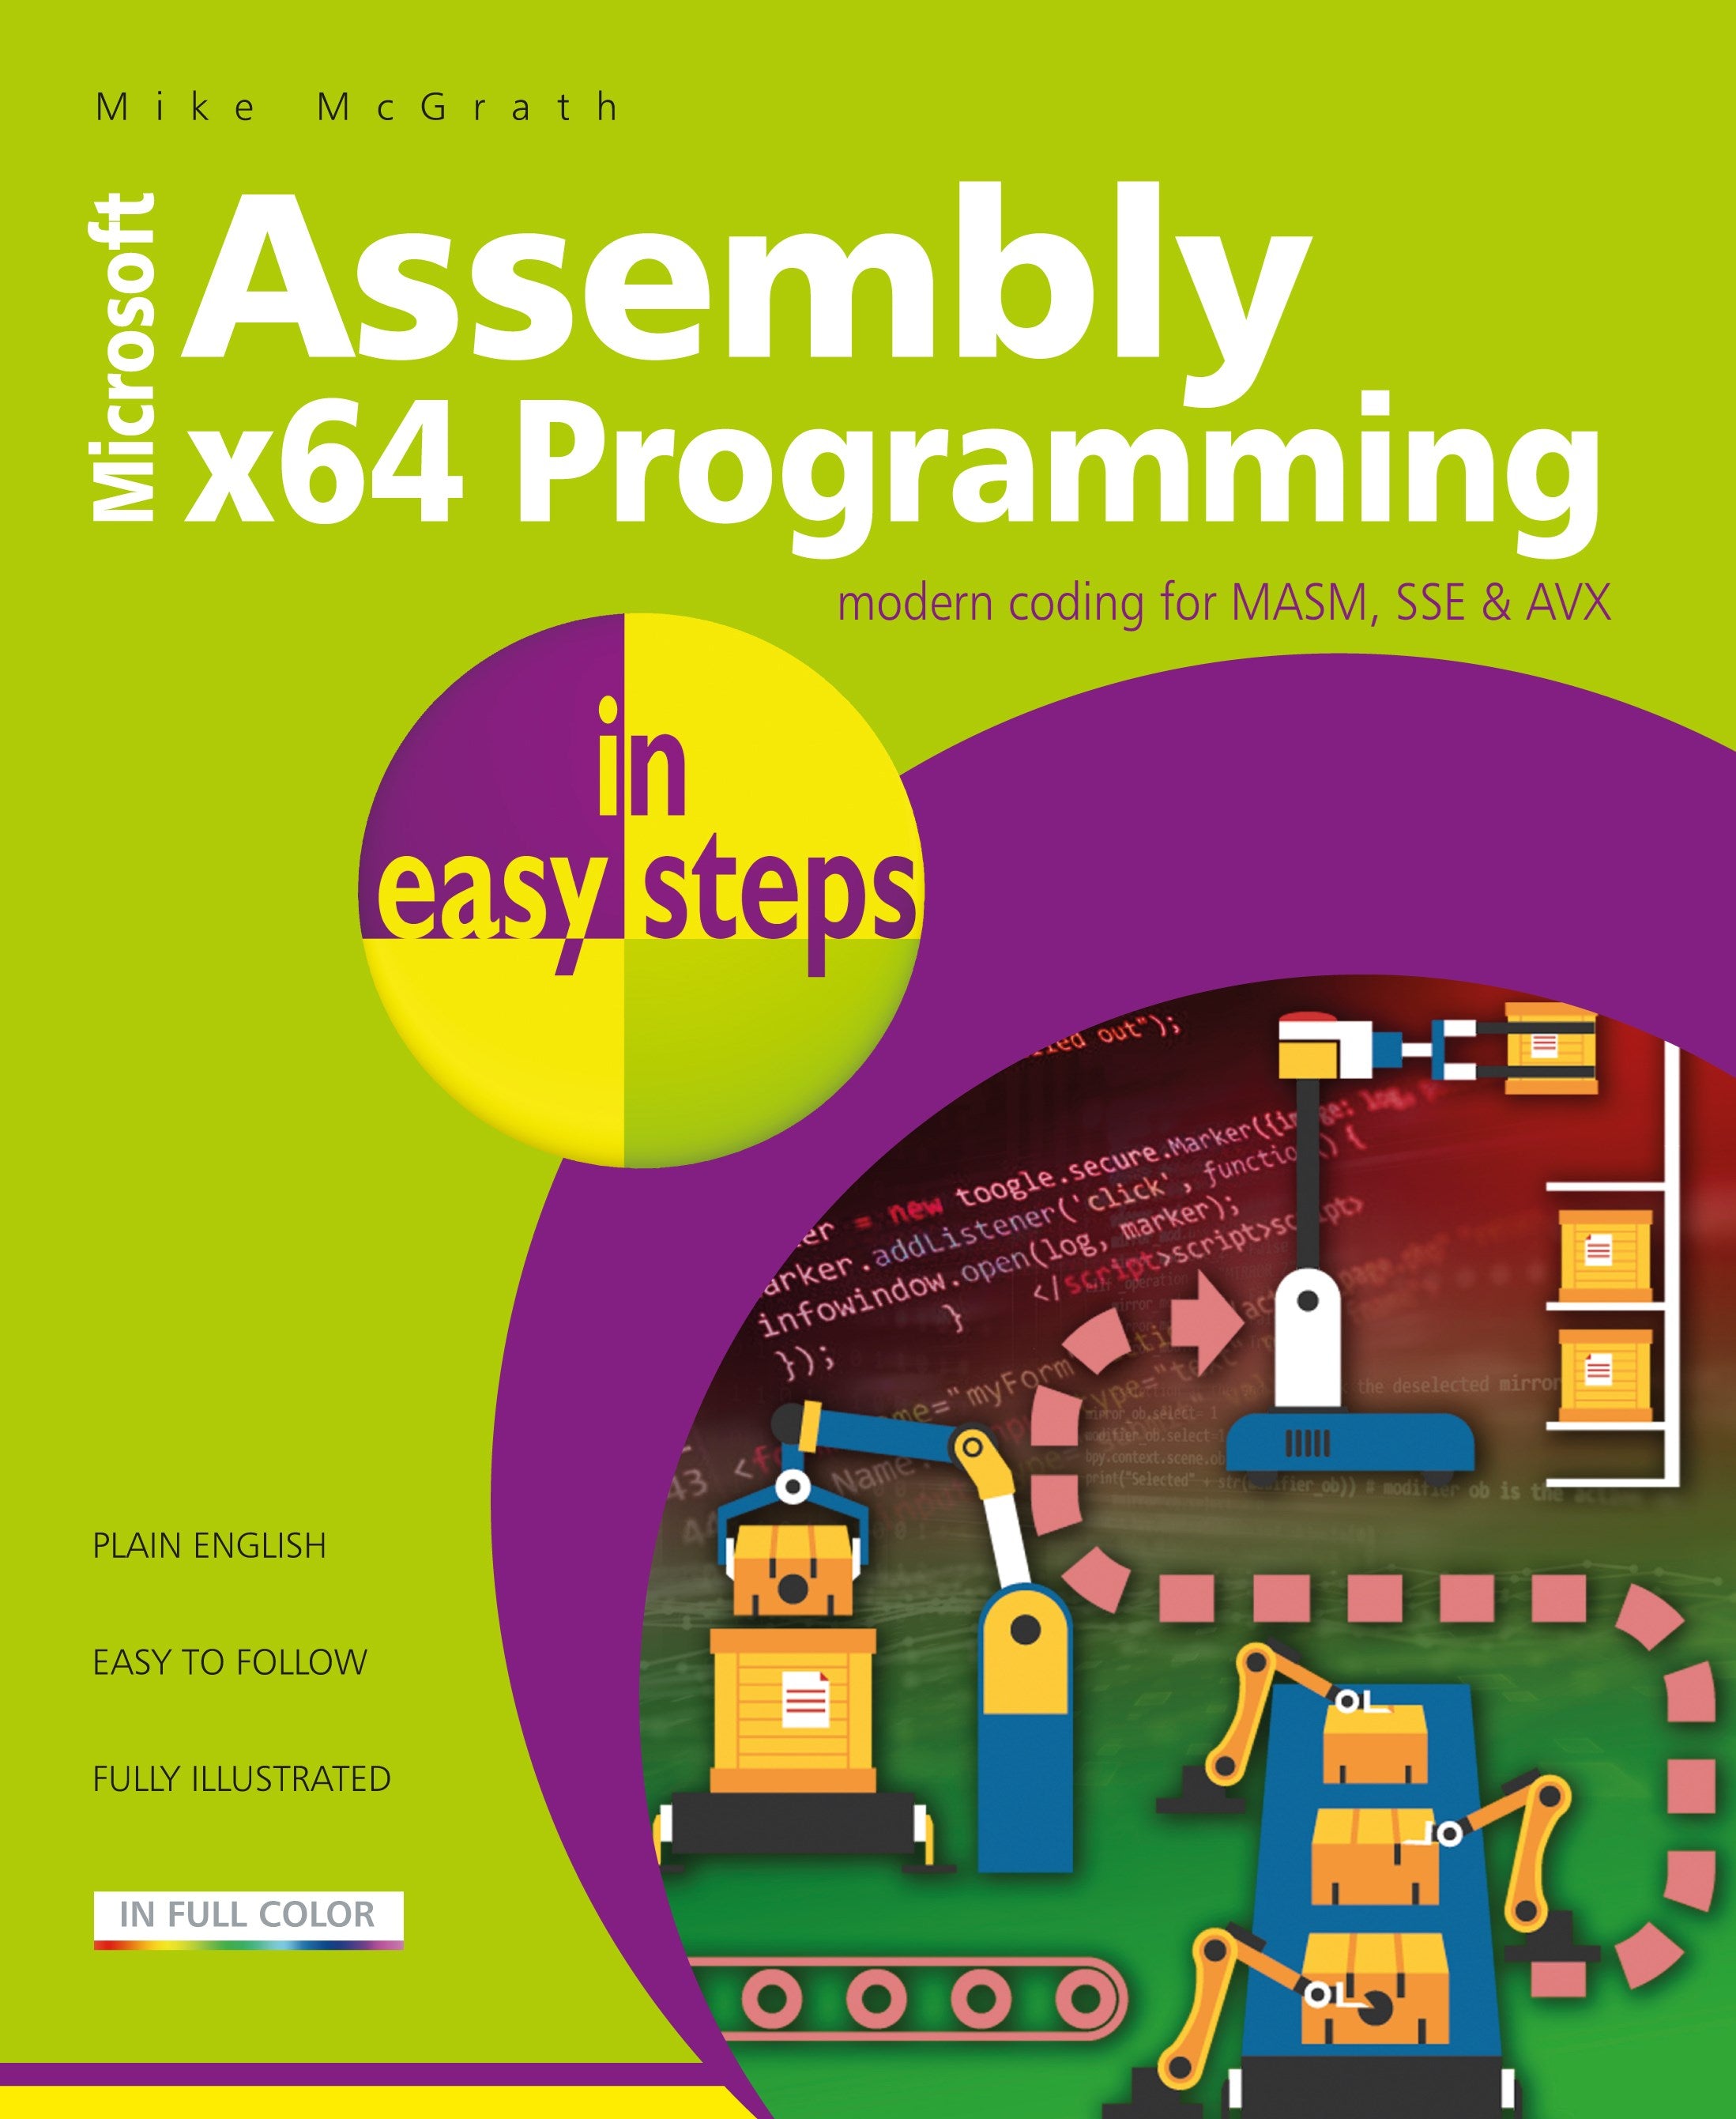 Assembly x64 in easy steps: Modern coding for MASM, SSE & AVX